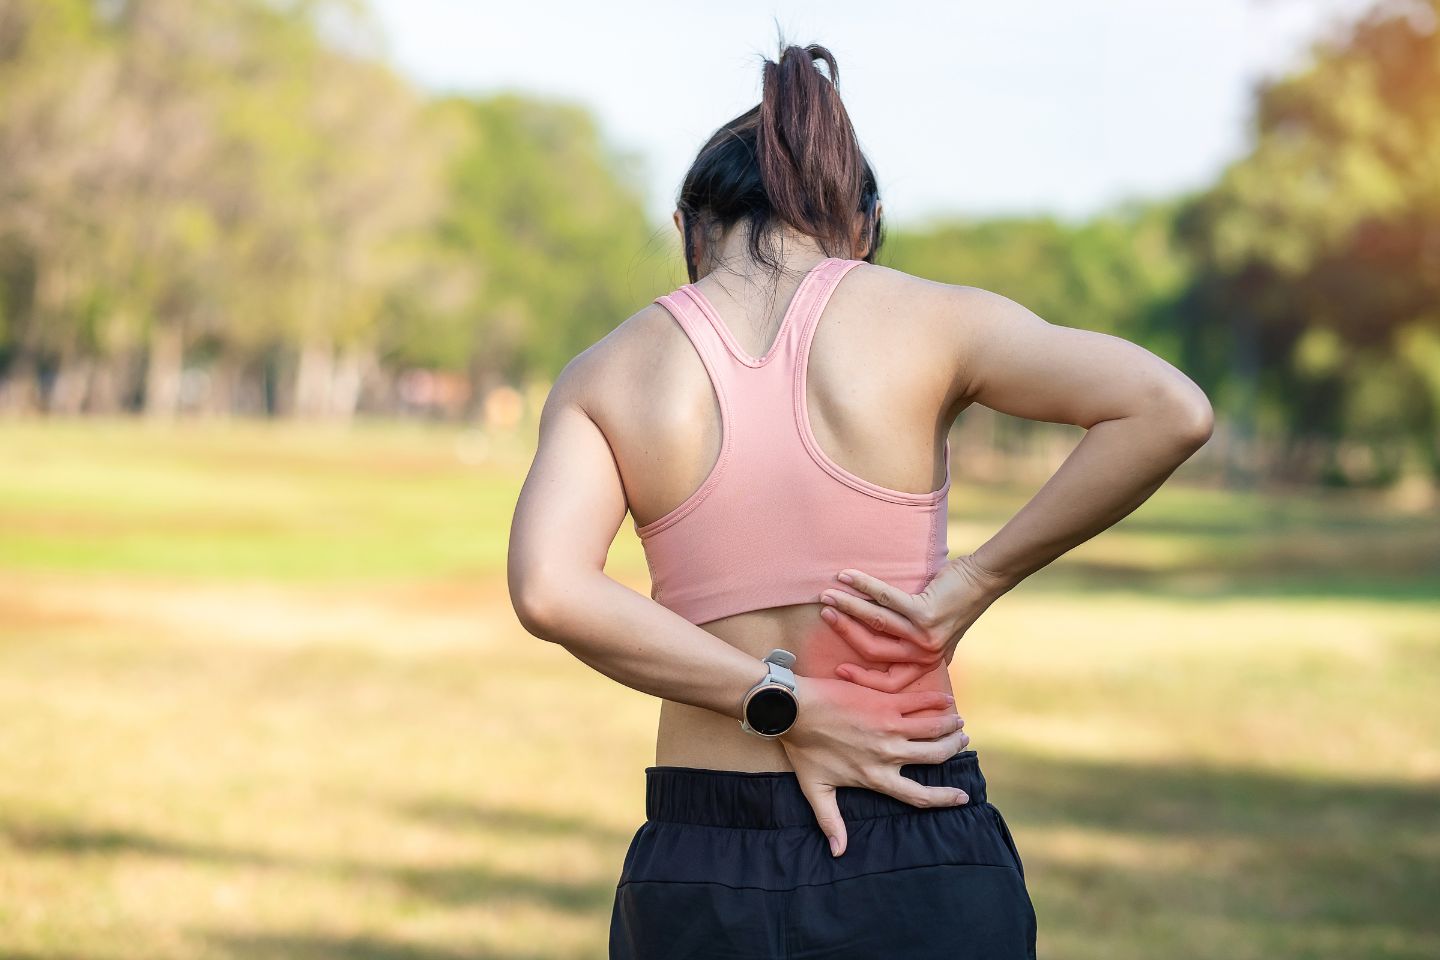 NYOrtho Back Brace For Women & Men - Instantly Relieves Back Pain - Back  Support Brace - Back Support Belt For Surgeries - Maximum Posture & Spine